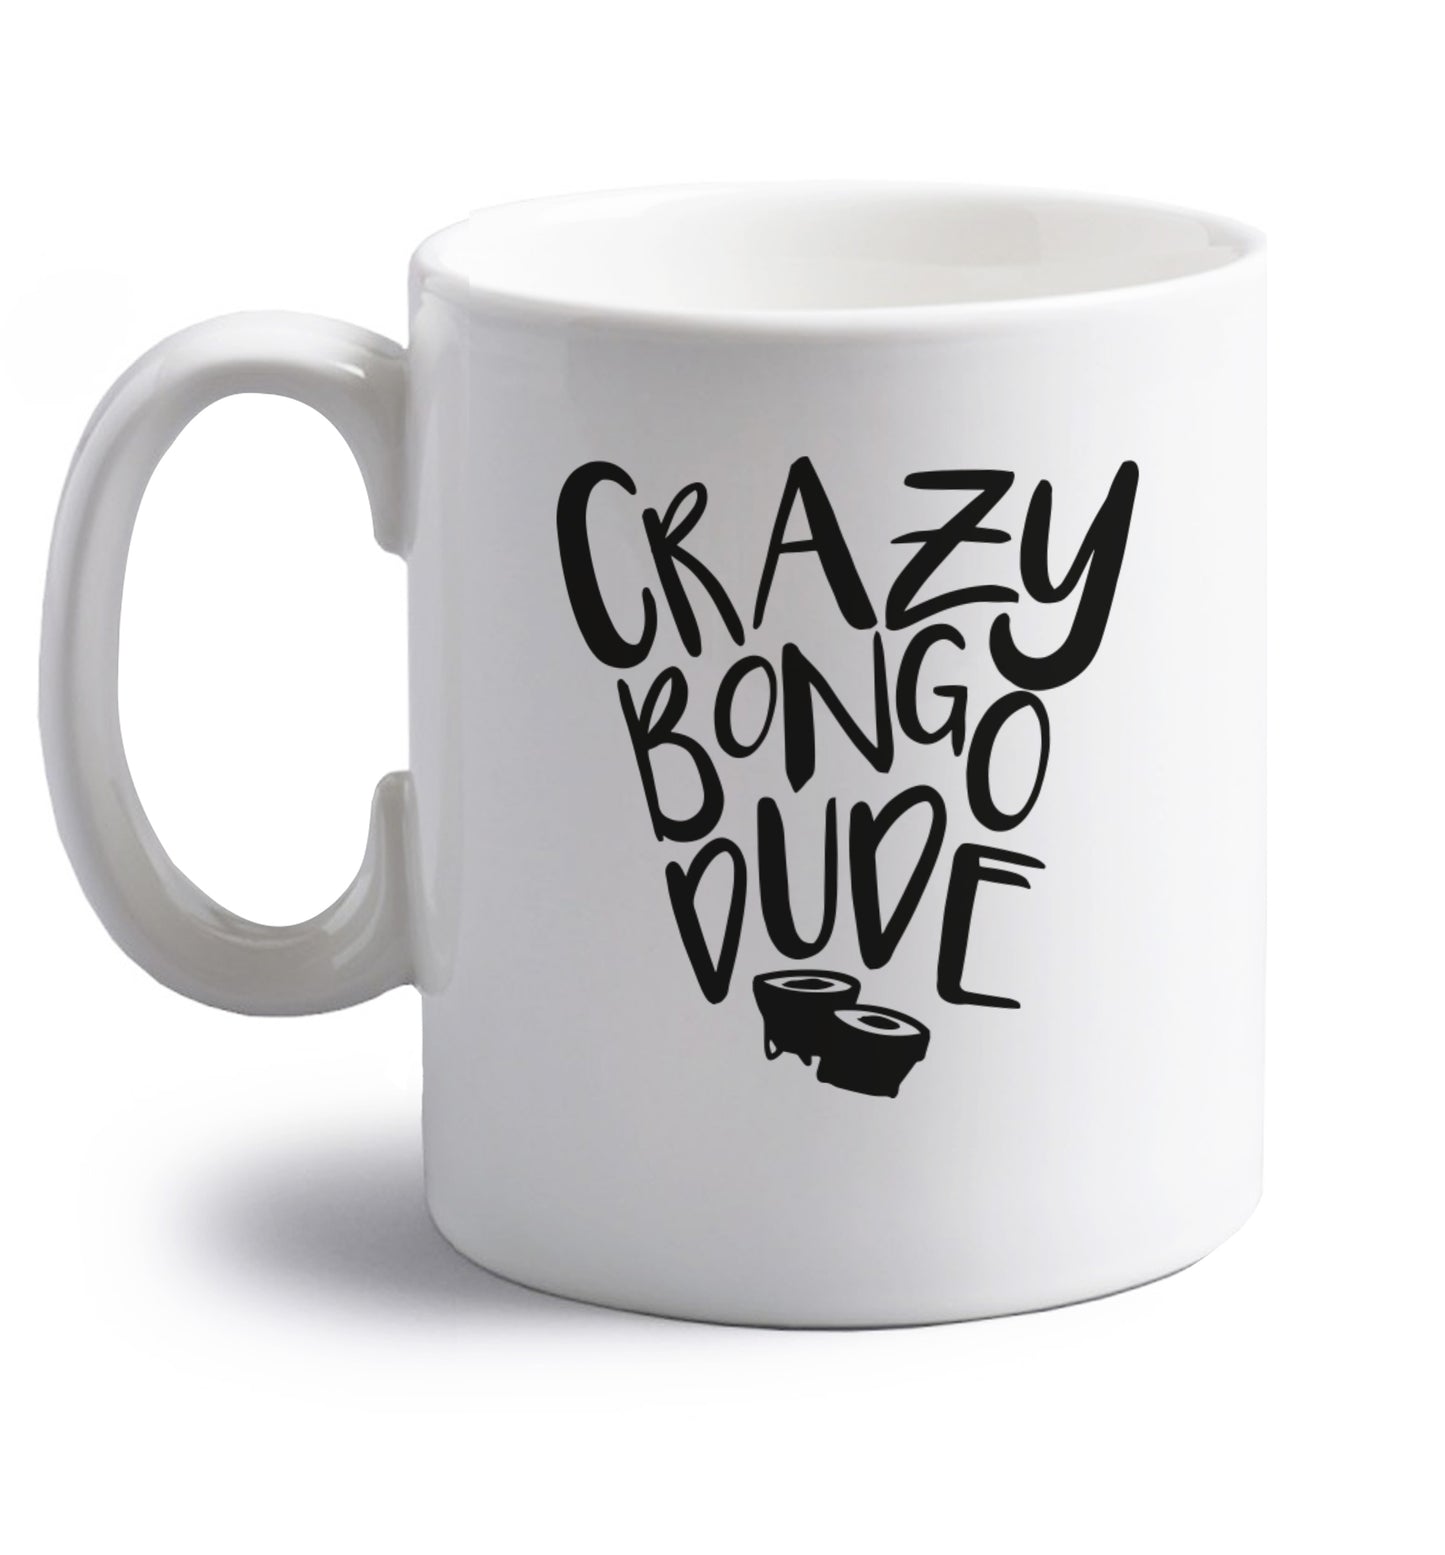 Crazy bongo dude right handed white ceramic mug 